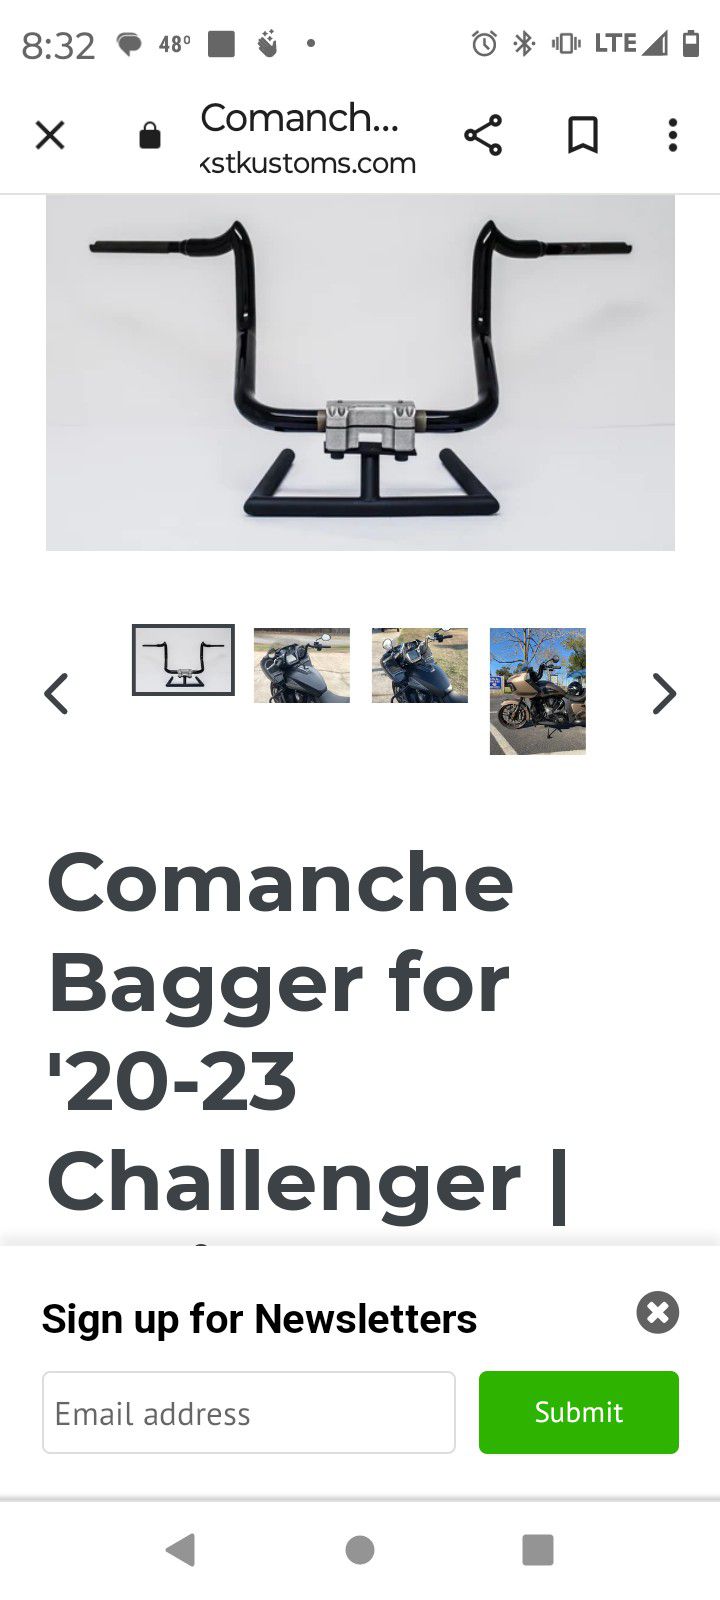 Comanche Bagger for '20-23 Challenger | Indian Handlebars

